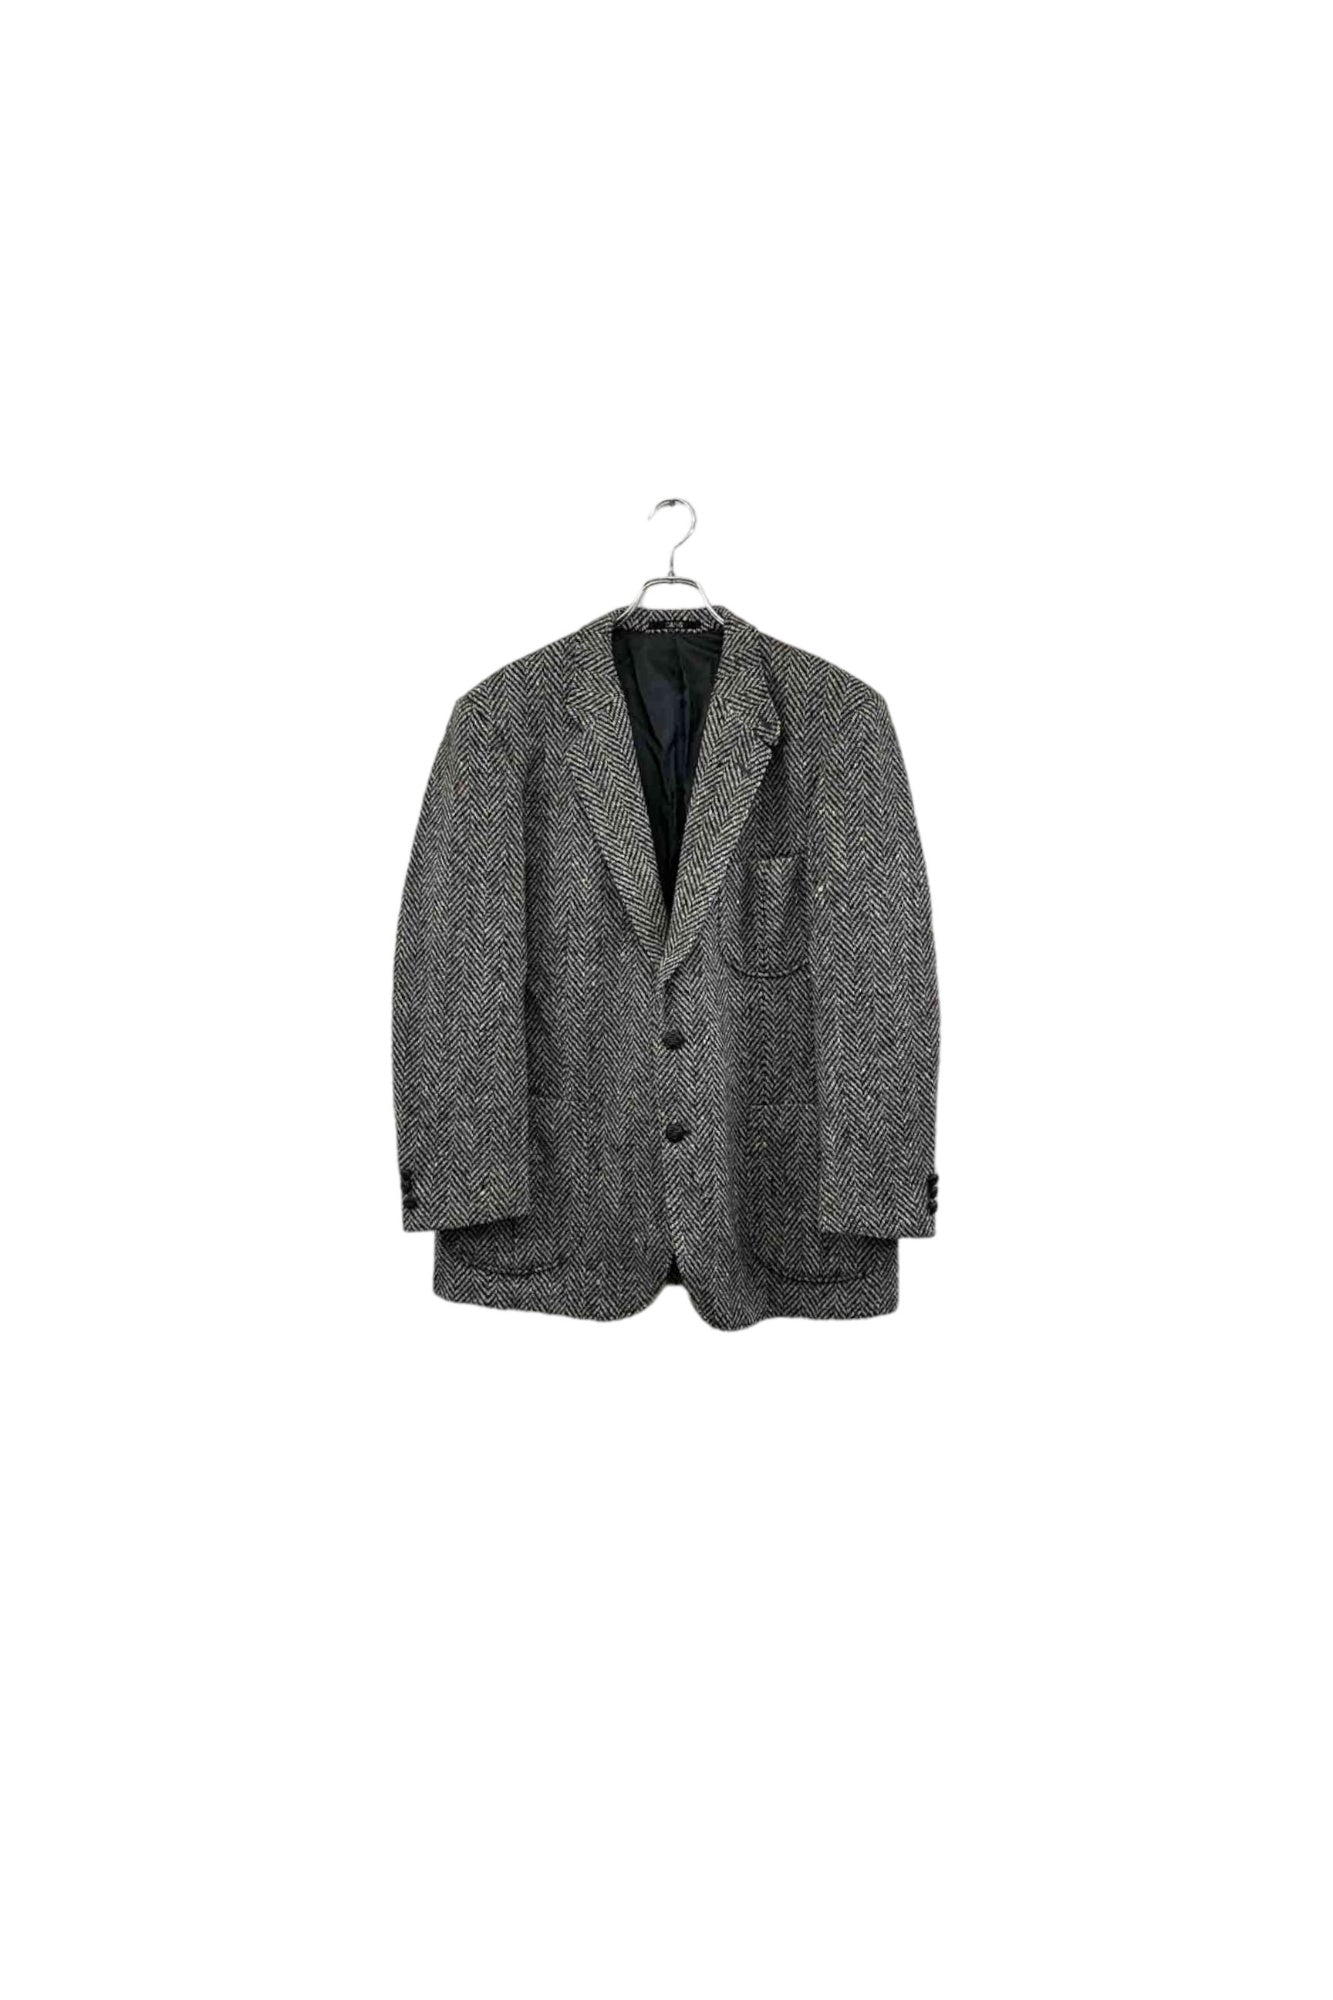 DAKS grey wool jacket